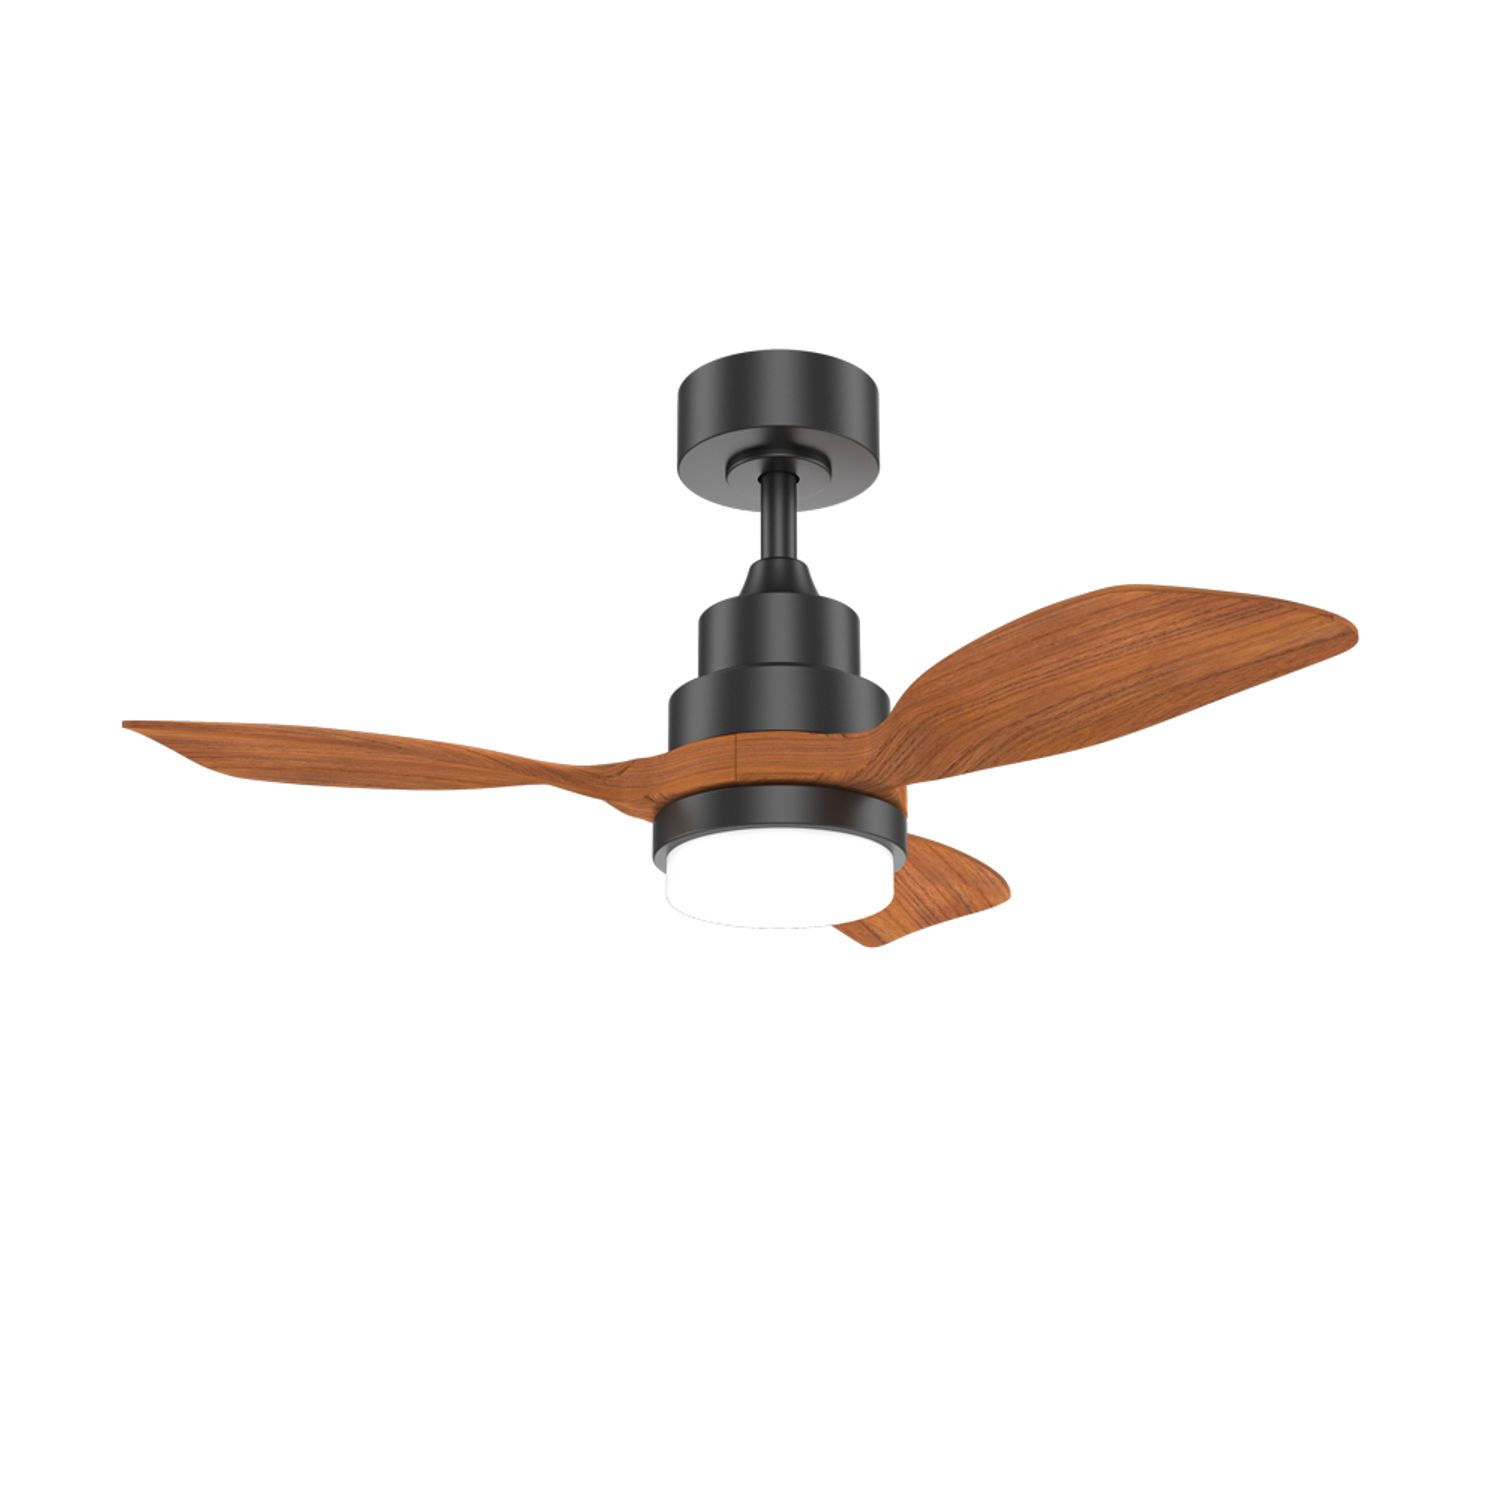 36" Designer Black and Wooden Ceiling Fan 6-Speed Remote Control KBS-36K002